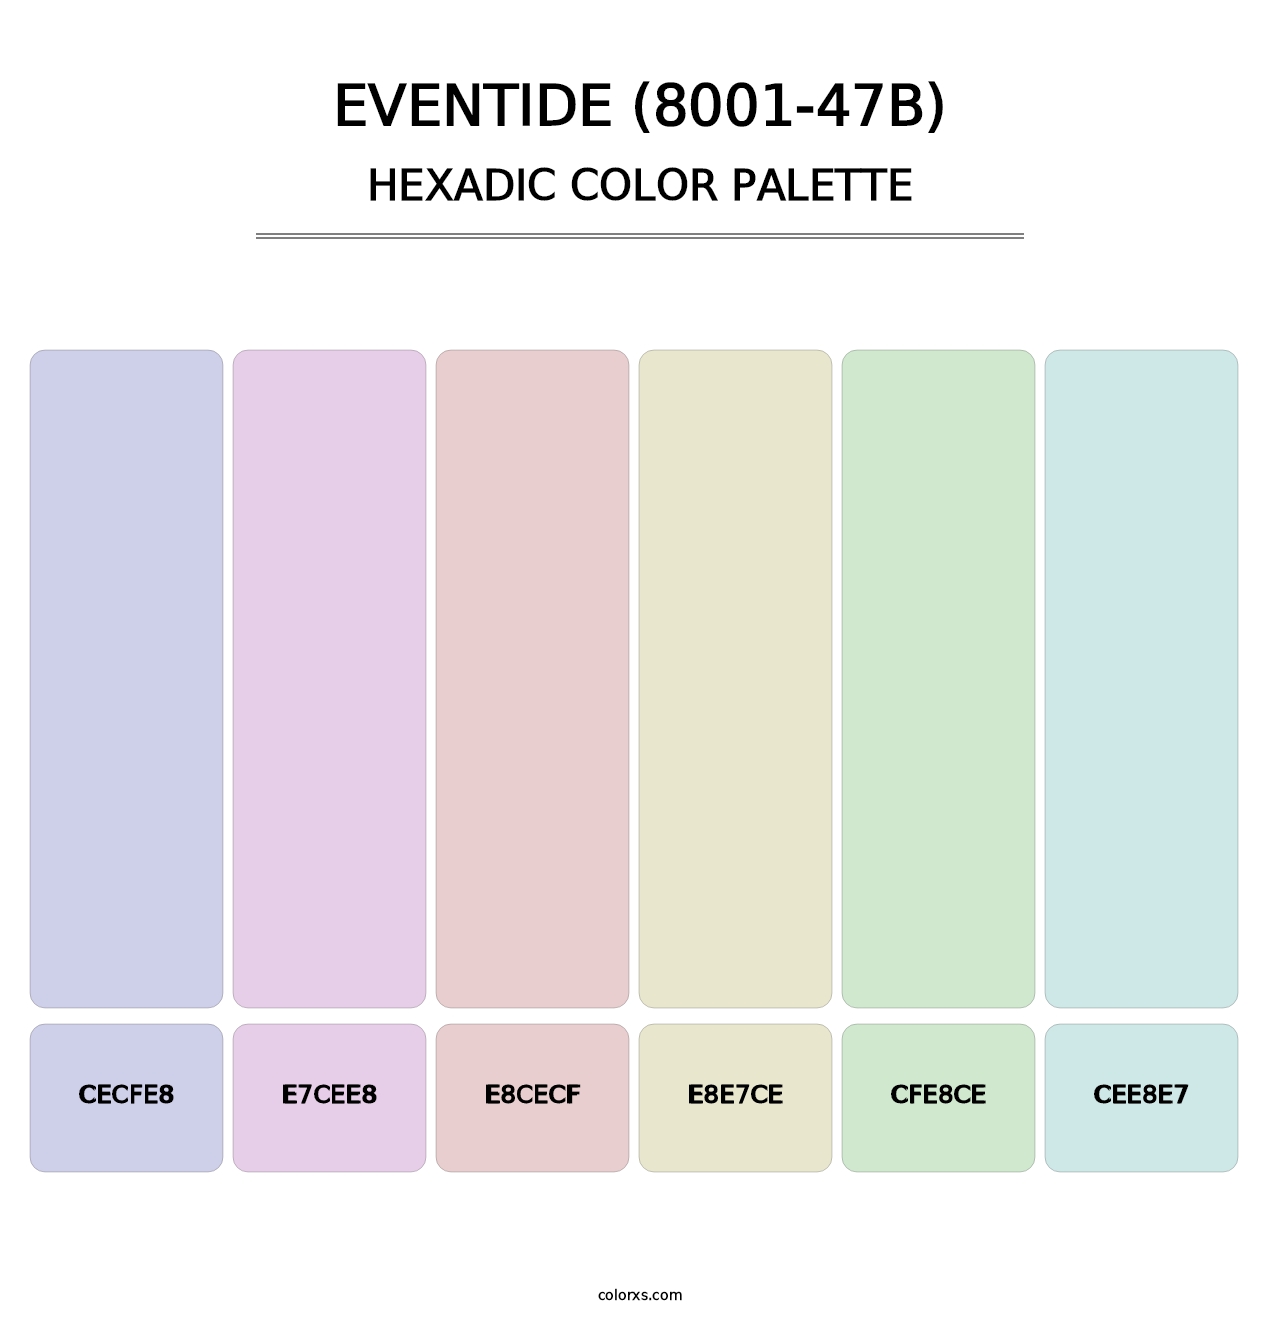 Eventide (8001-47B) - Hexadic Color Palette